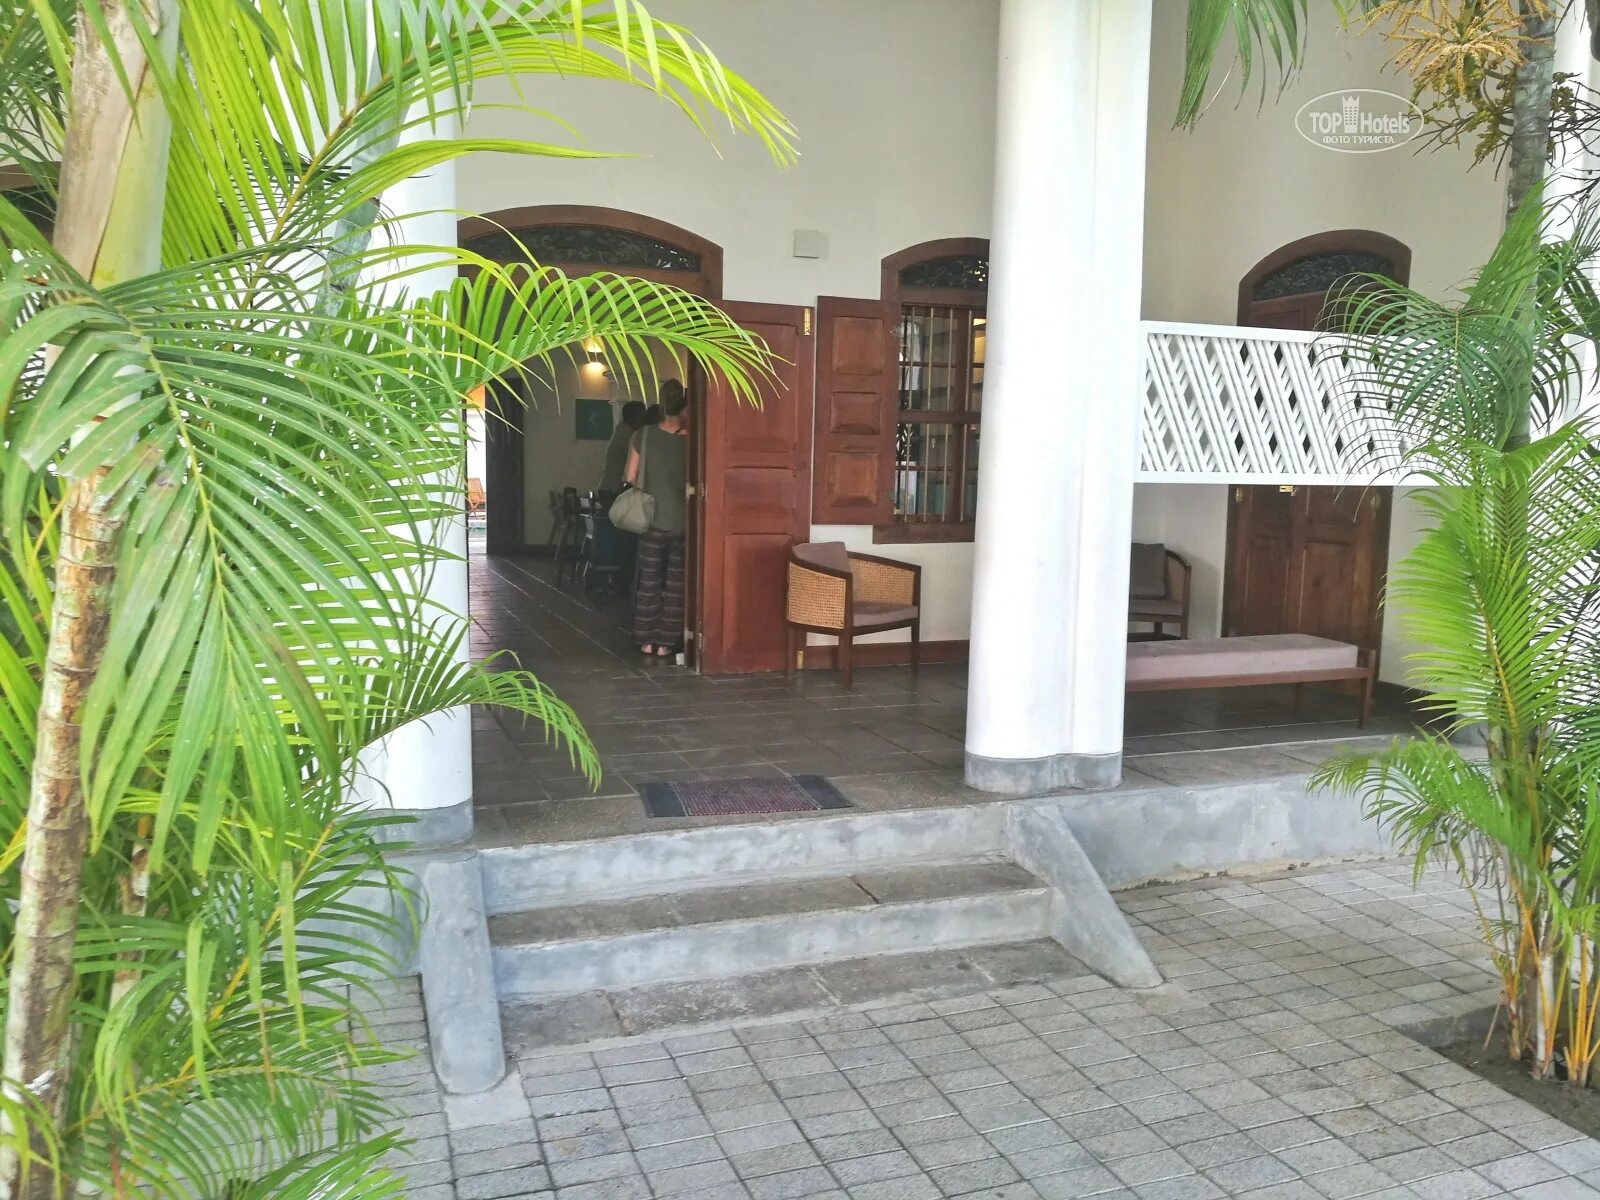 Hotel j Unawatuna 3 *** (Унаватуна). Coral Palm Villa Apartments 2 Шри-Ланка Унаватуна. Прайм тайм Унаватуна Шри Ланка. Hotel j unawatuna